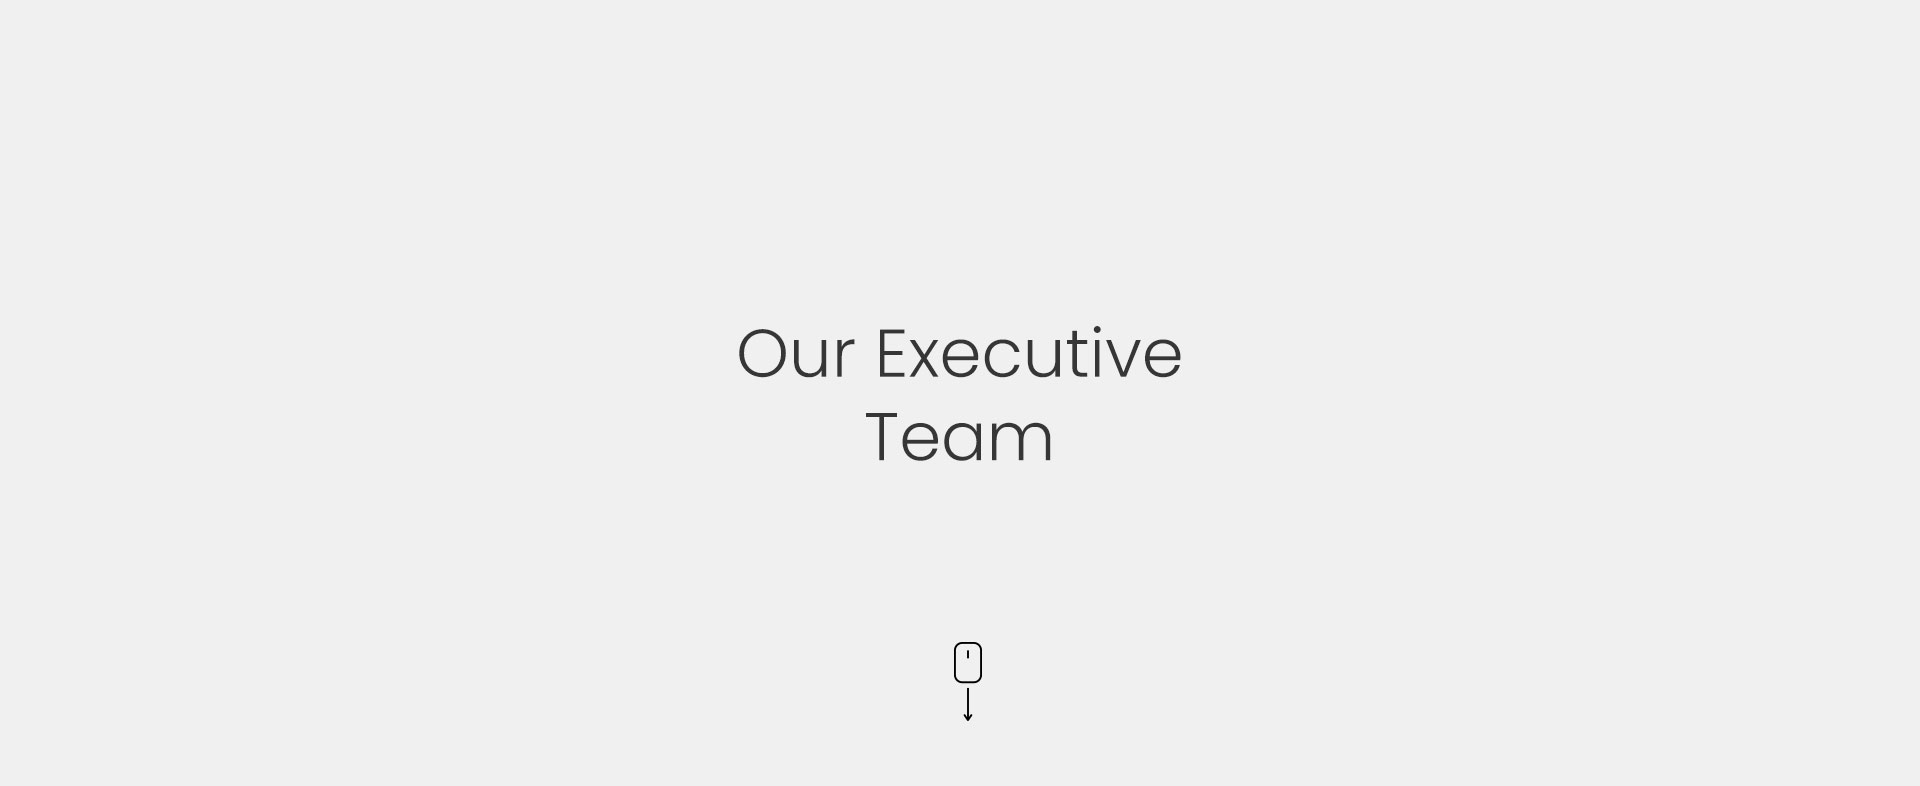 Our Executive Team